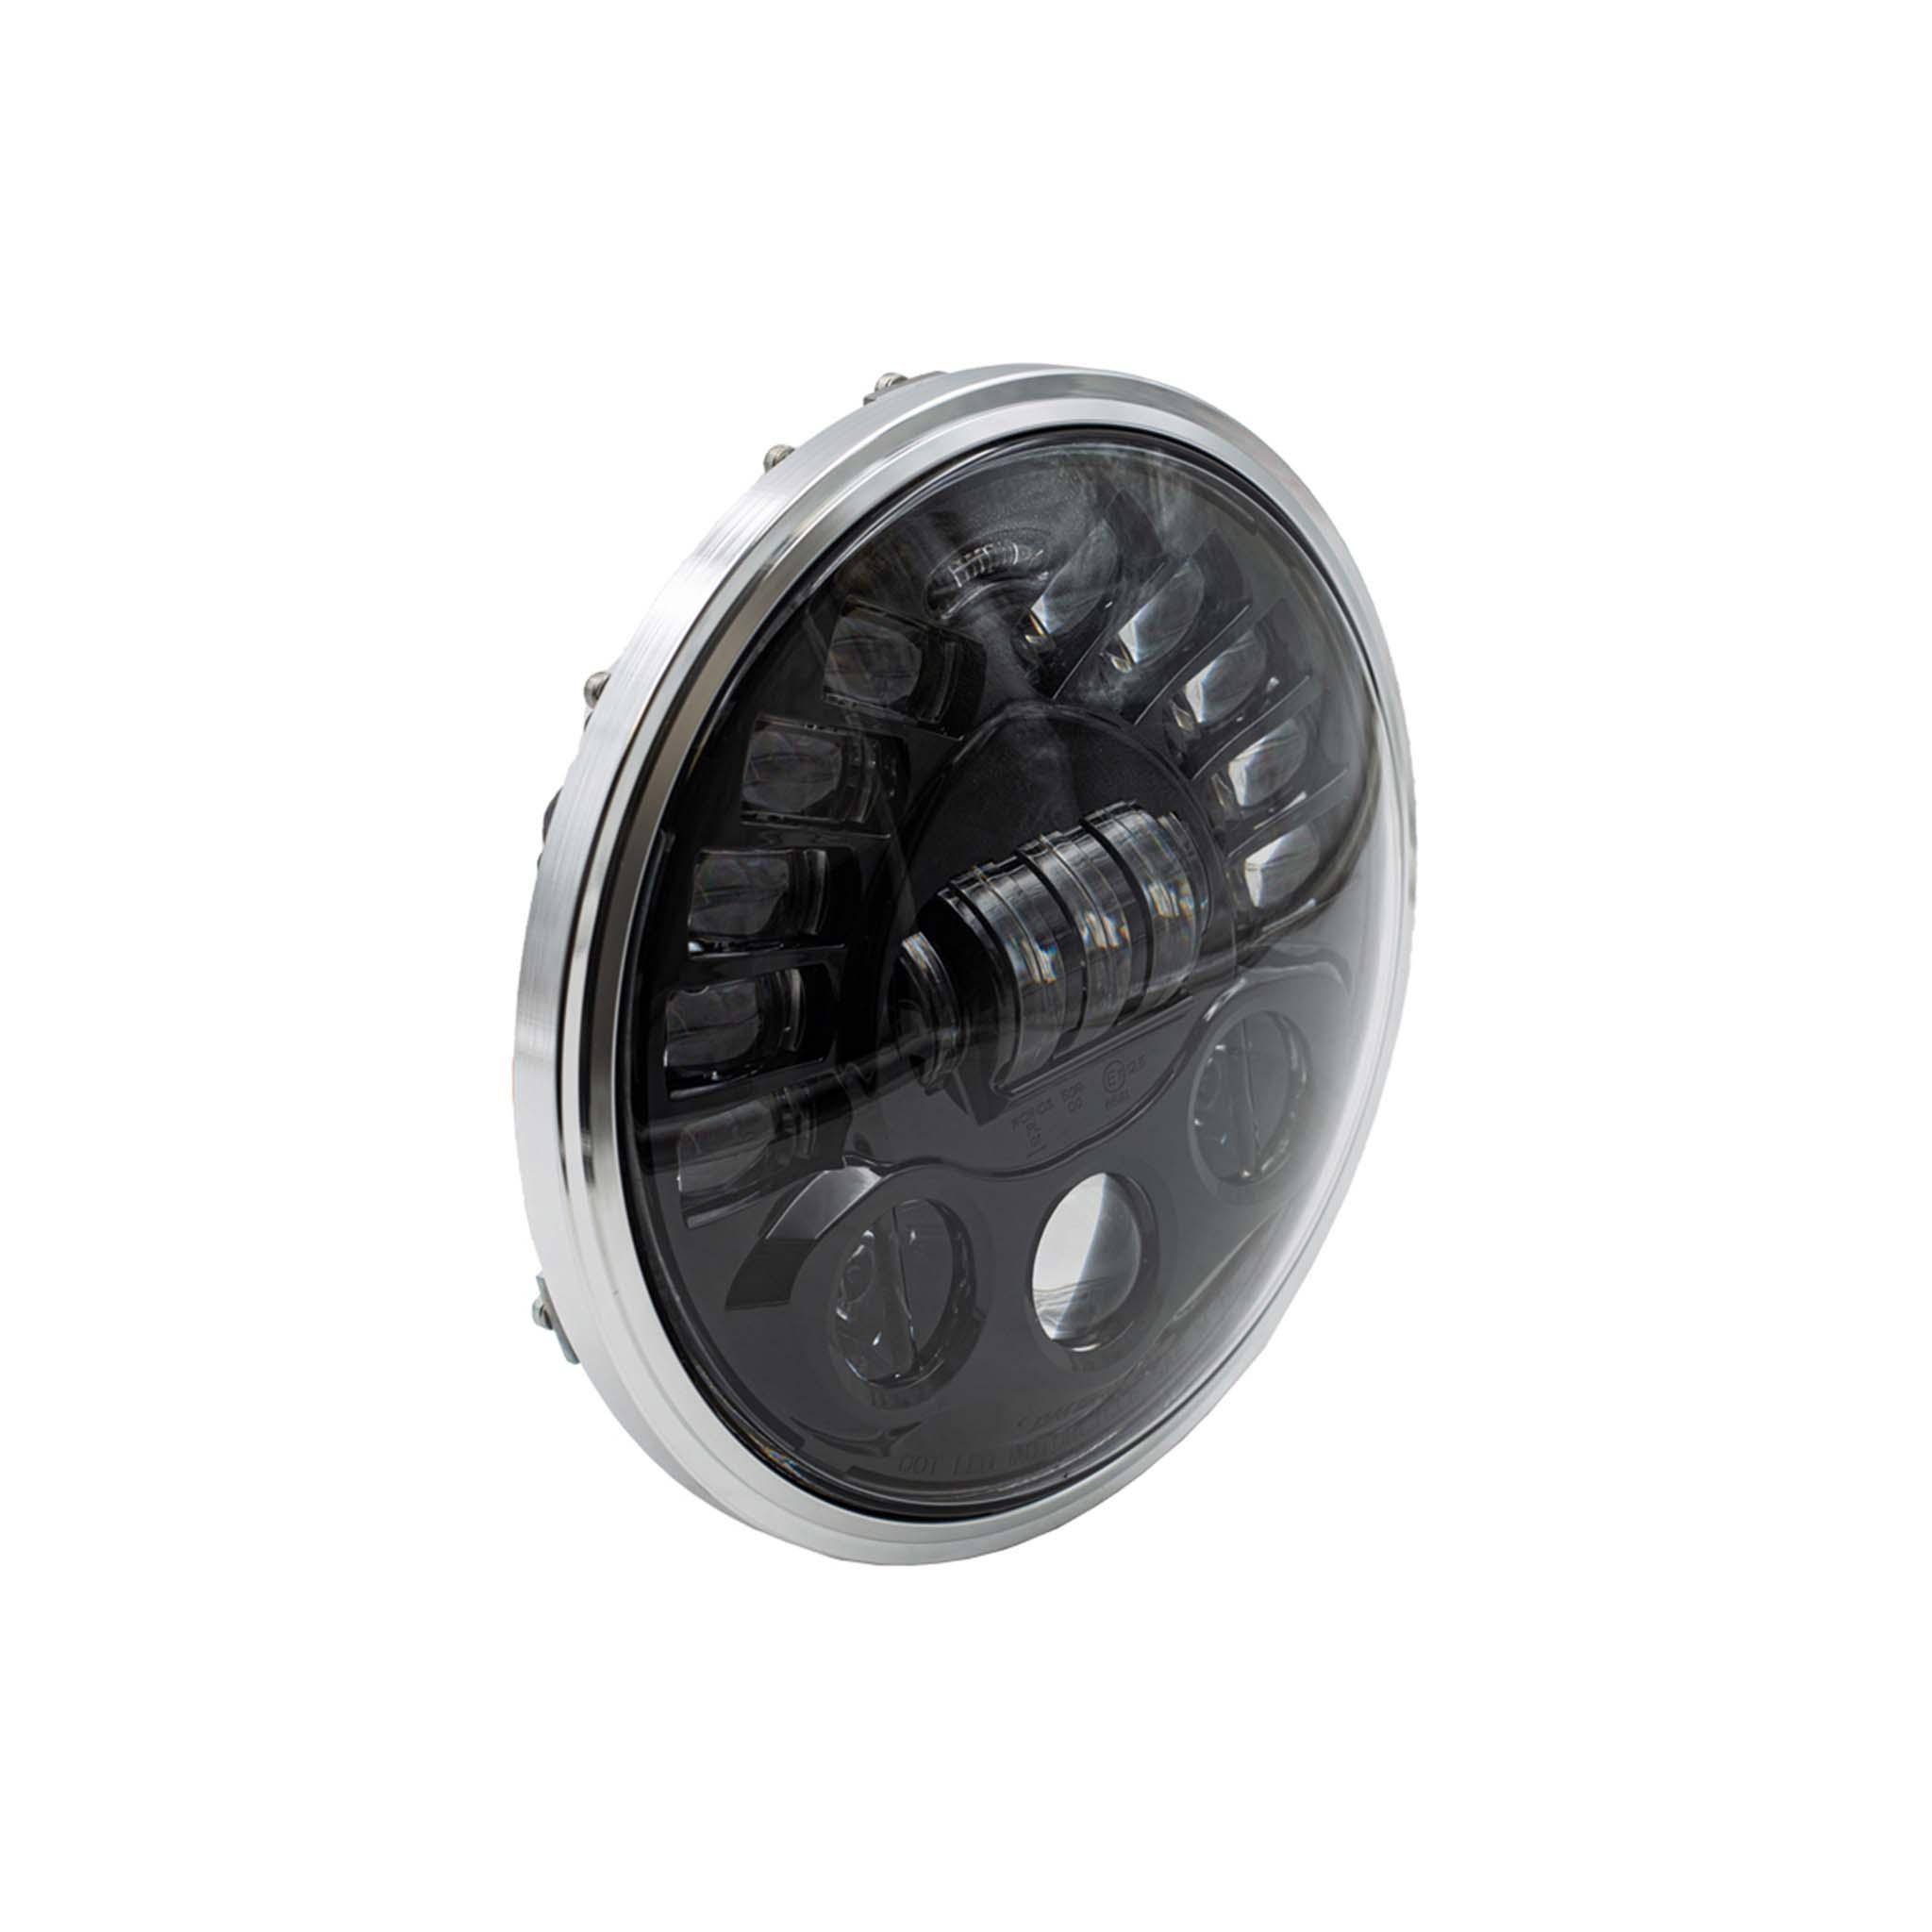 Adaptive LED Headlight - British Customs